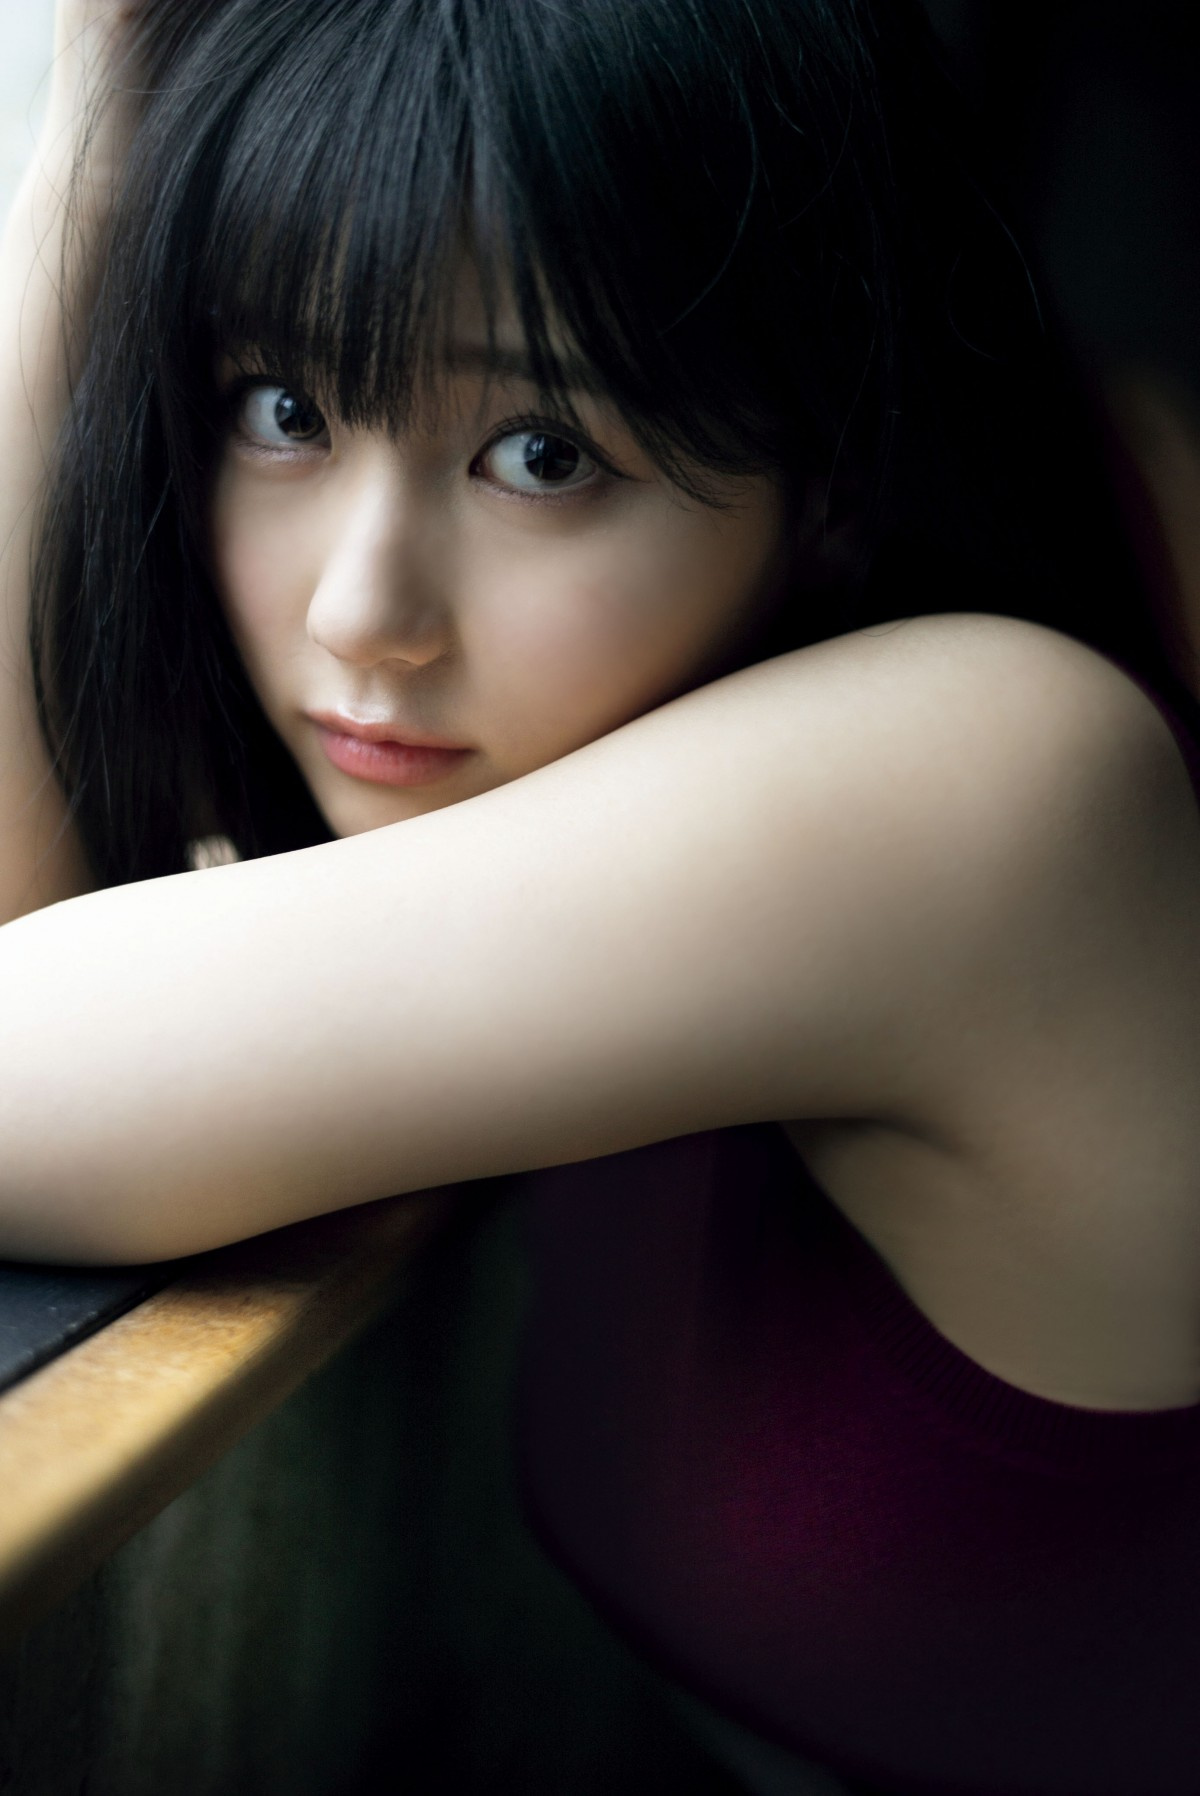 Hkt48田中美久 大人のアイドルへ成長 美脚チラリで色気も披露 独占カットあり Oricon News